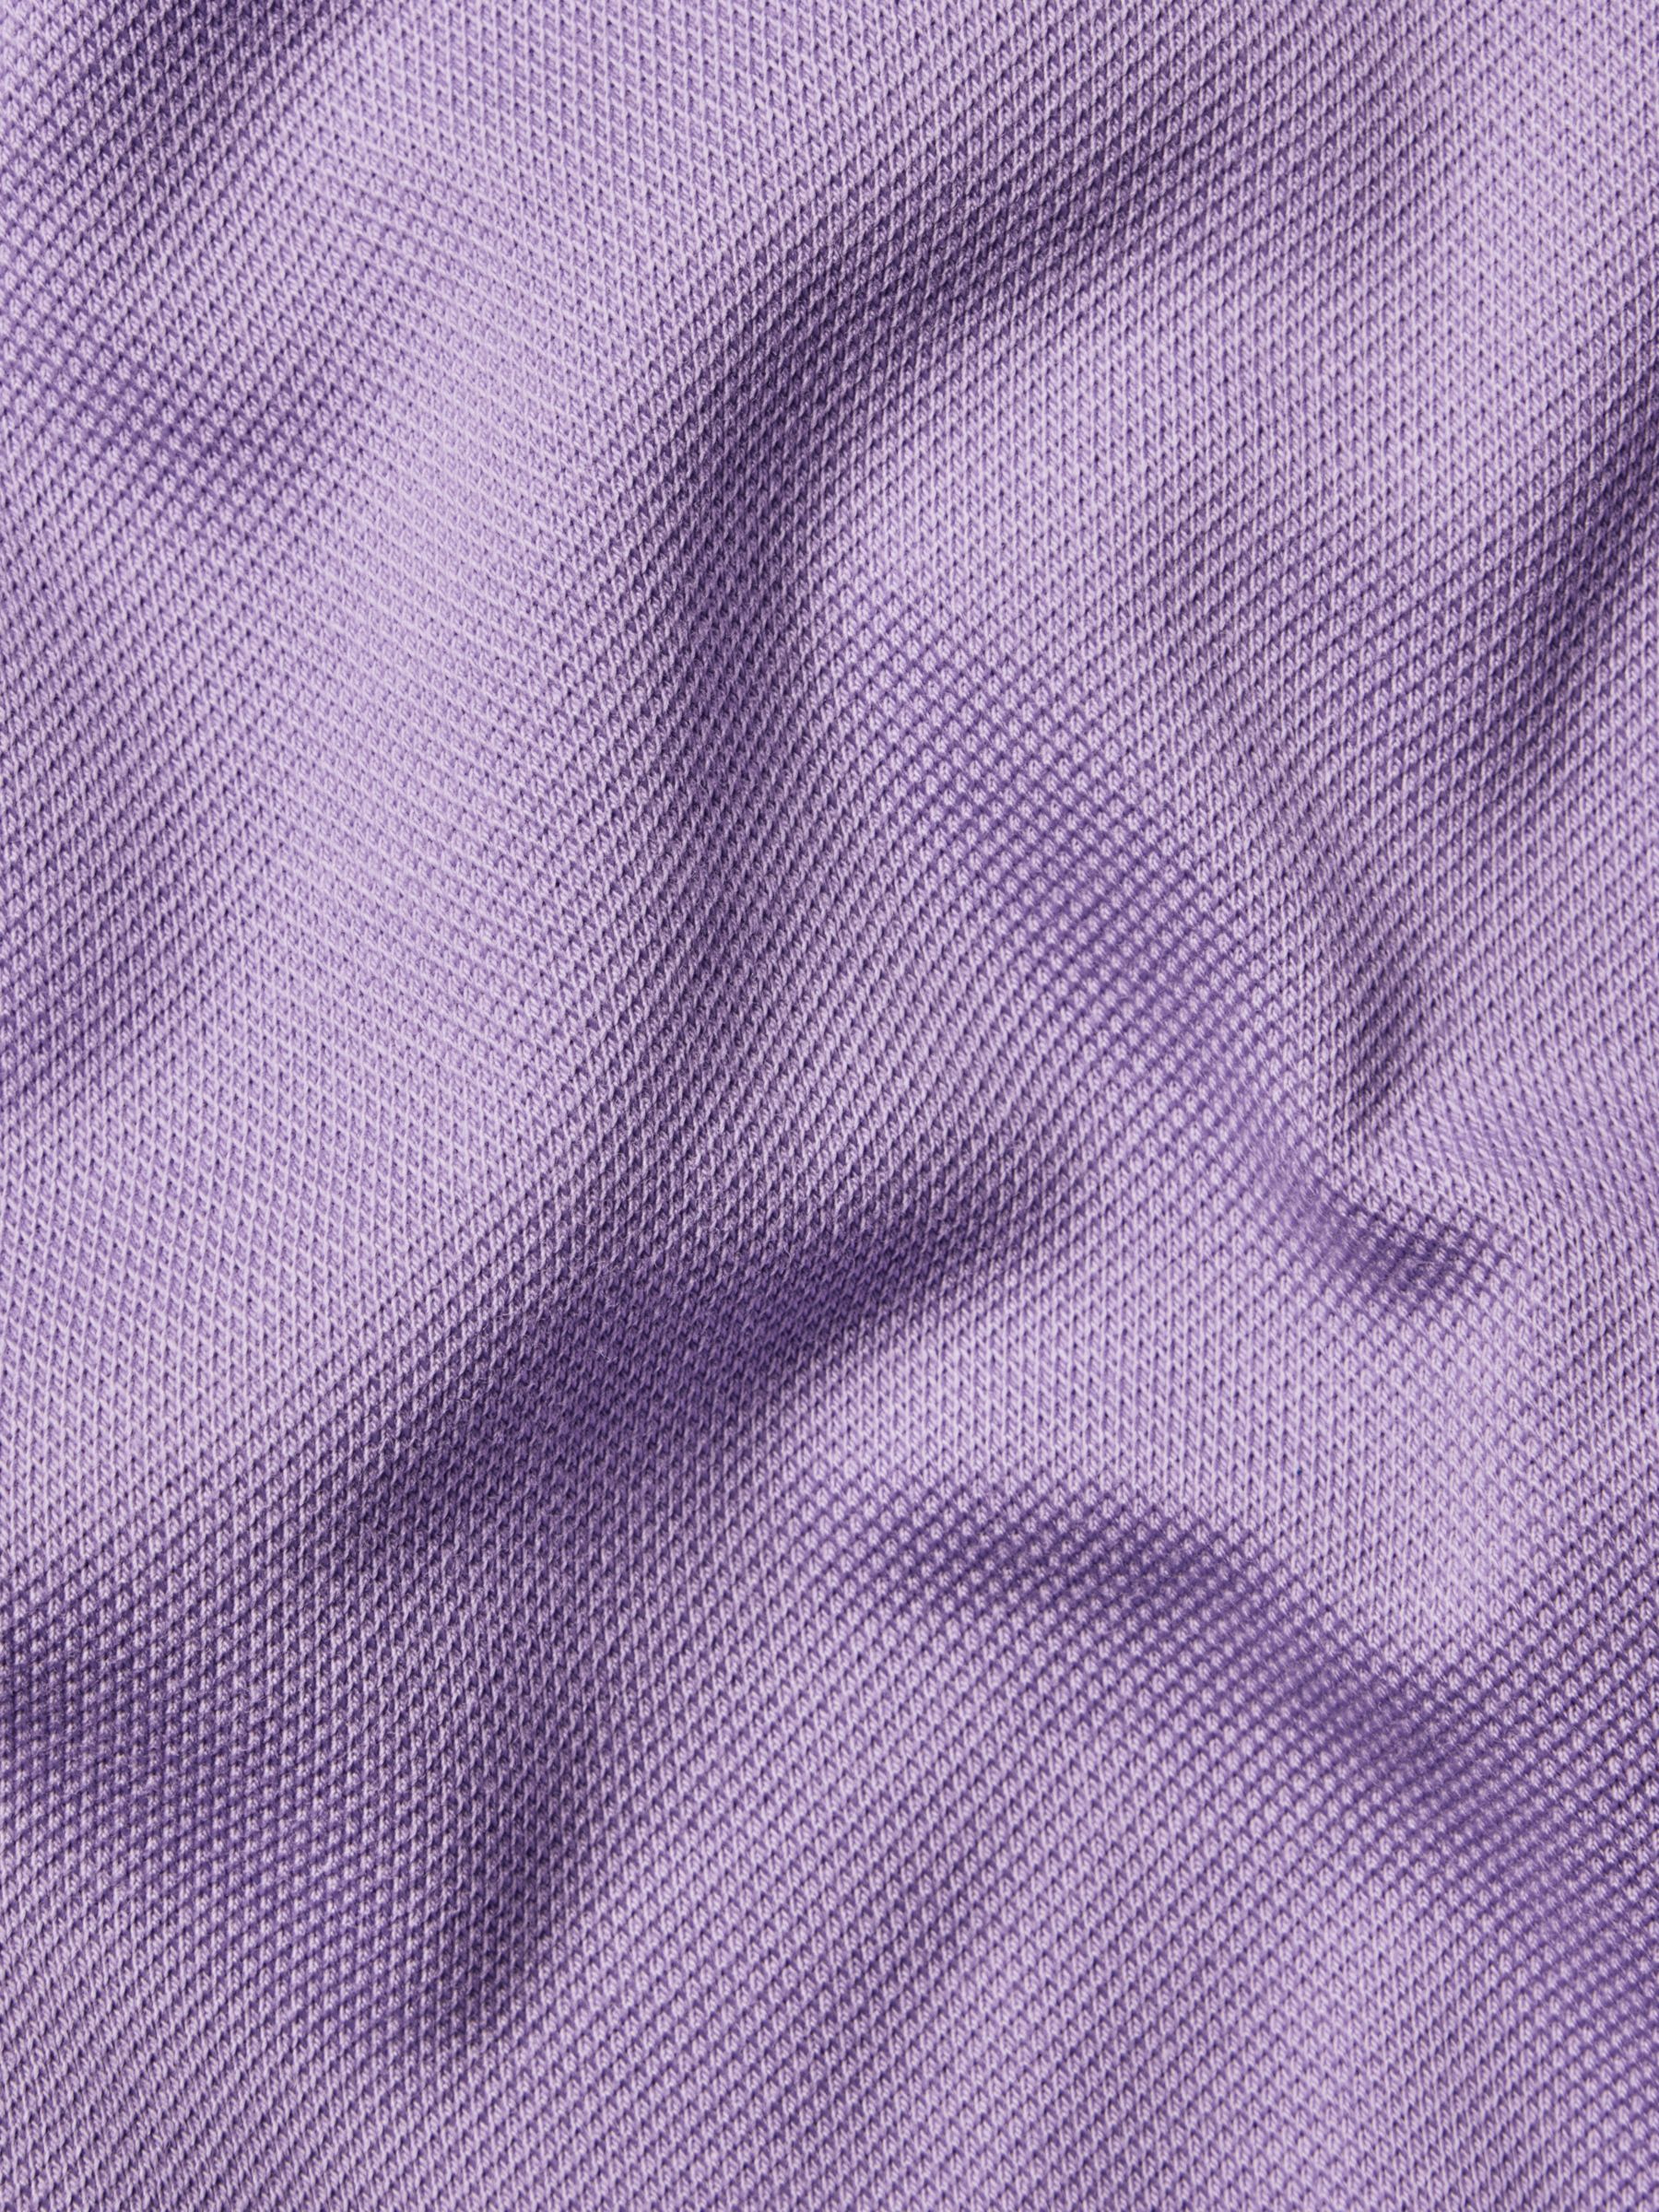 Charles Tyrwhitt Pique Polo Shirt, Lilac Purple at John Lewis & Partners